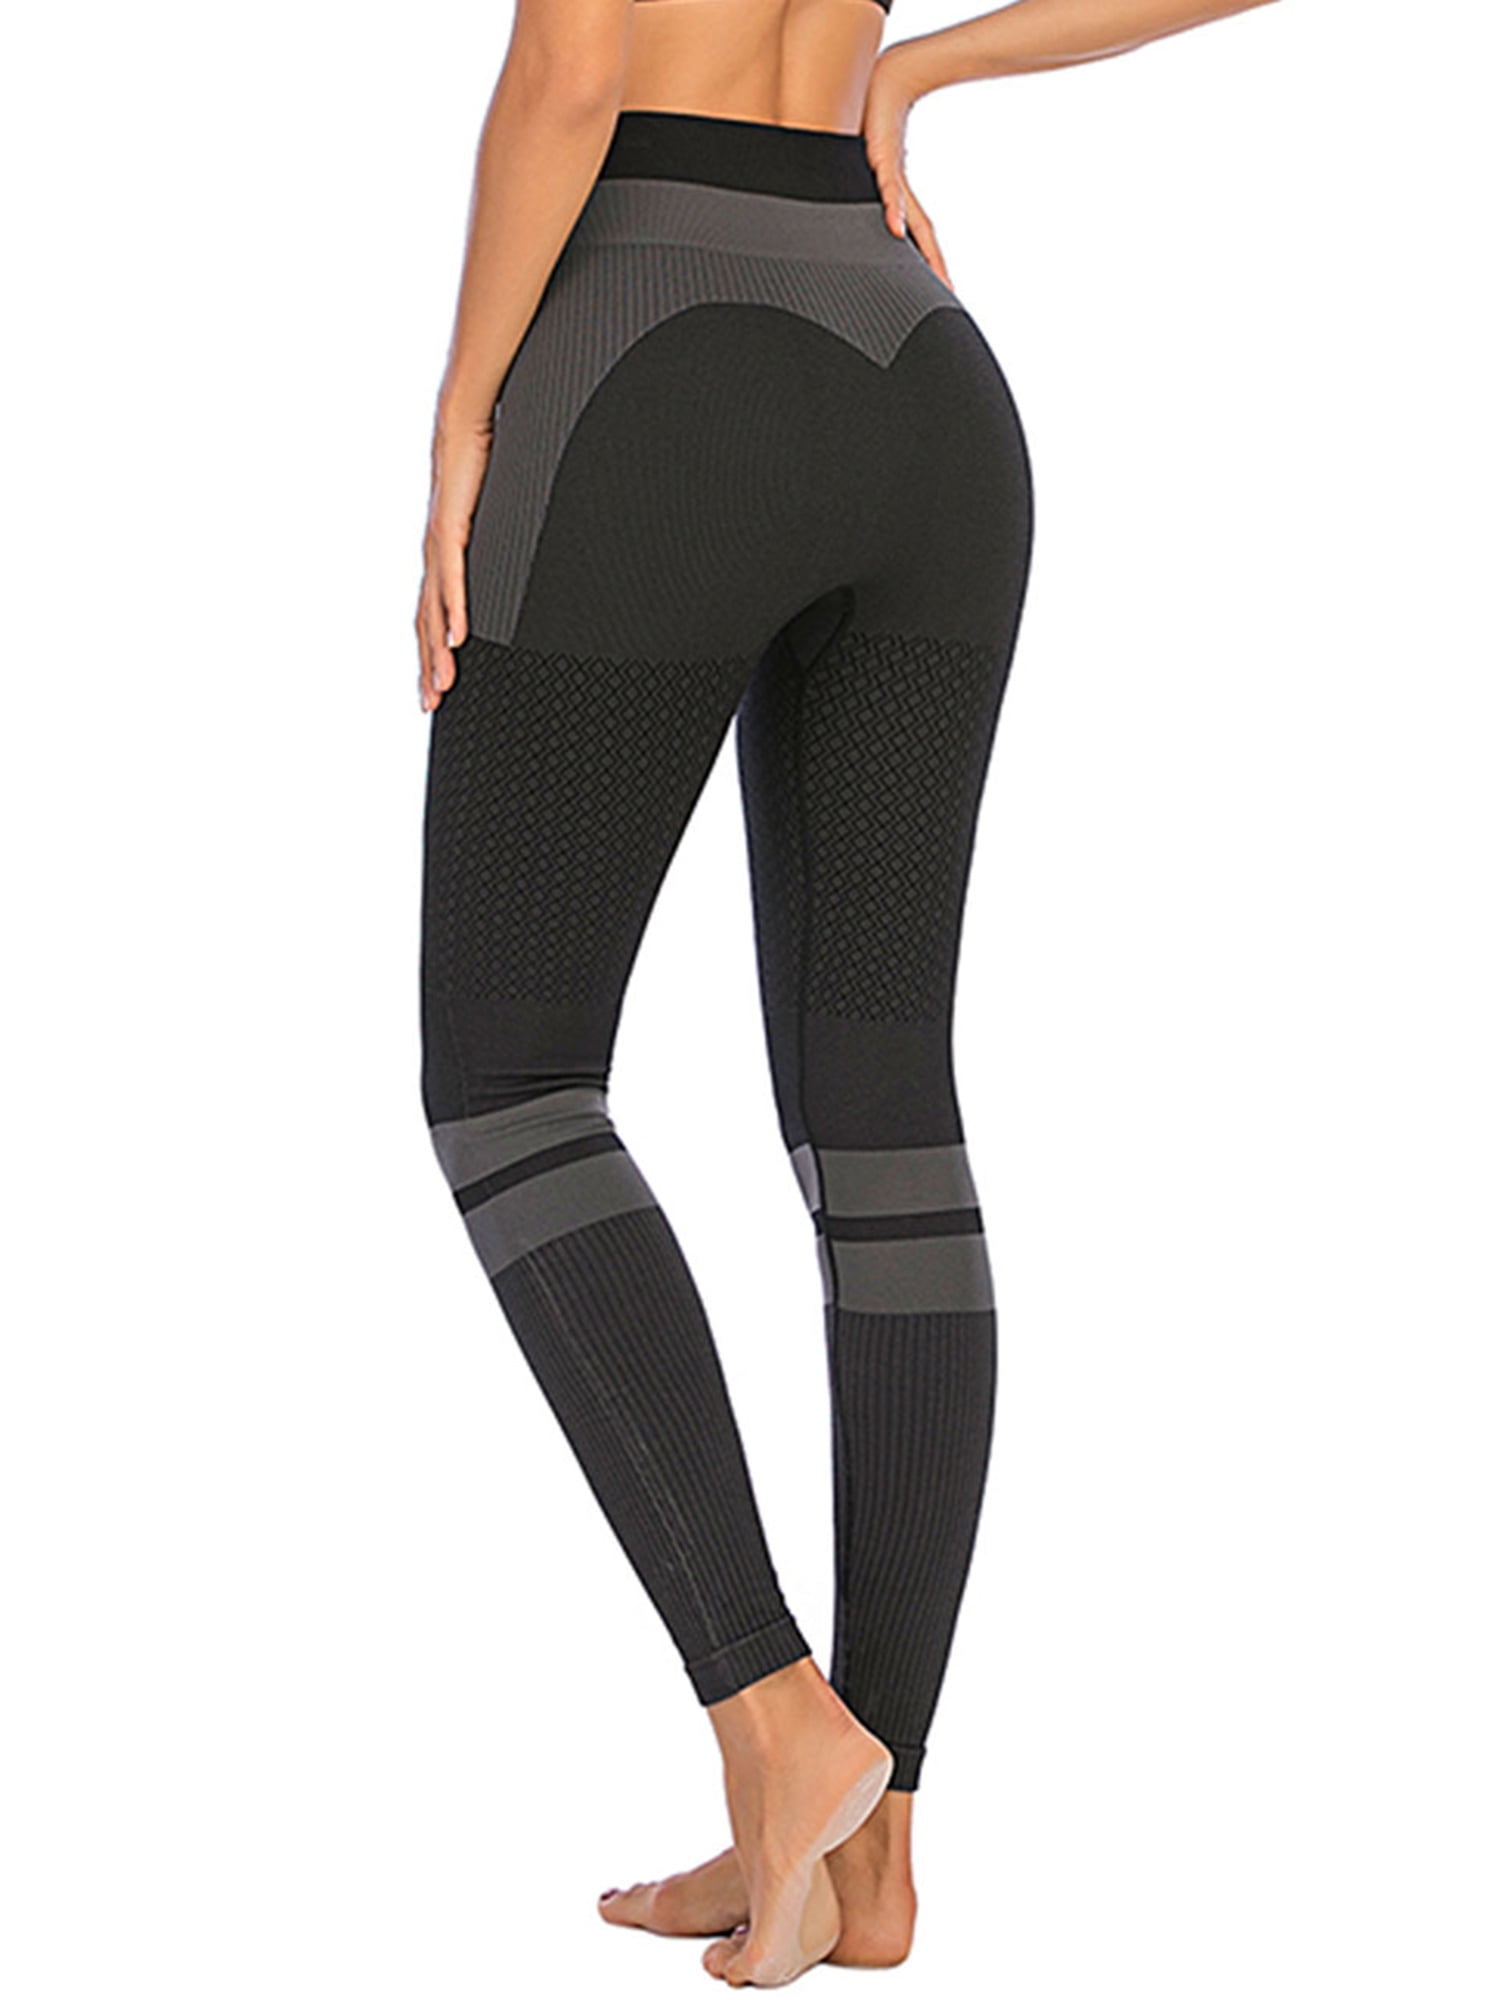 FANNYC Yoga Pants For Women's High Waist Sports Leggings Tummy Control  Pilates External Wear Gym Exercise Activewear Elastic Belt Tight Loungewear